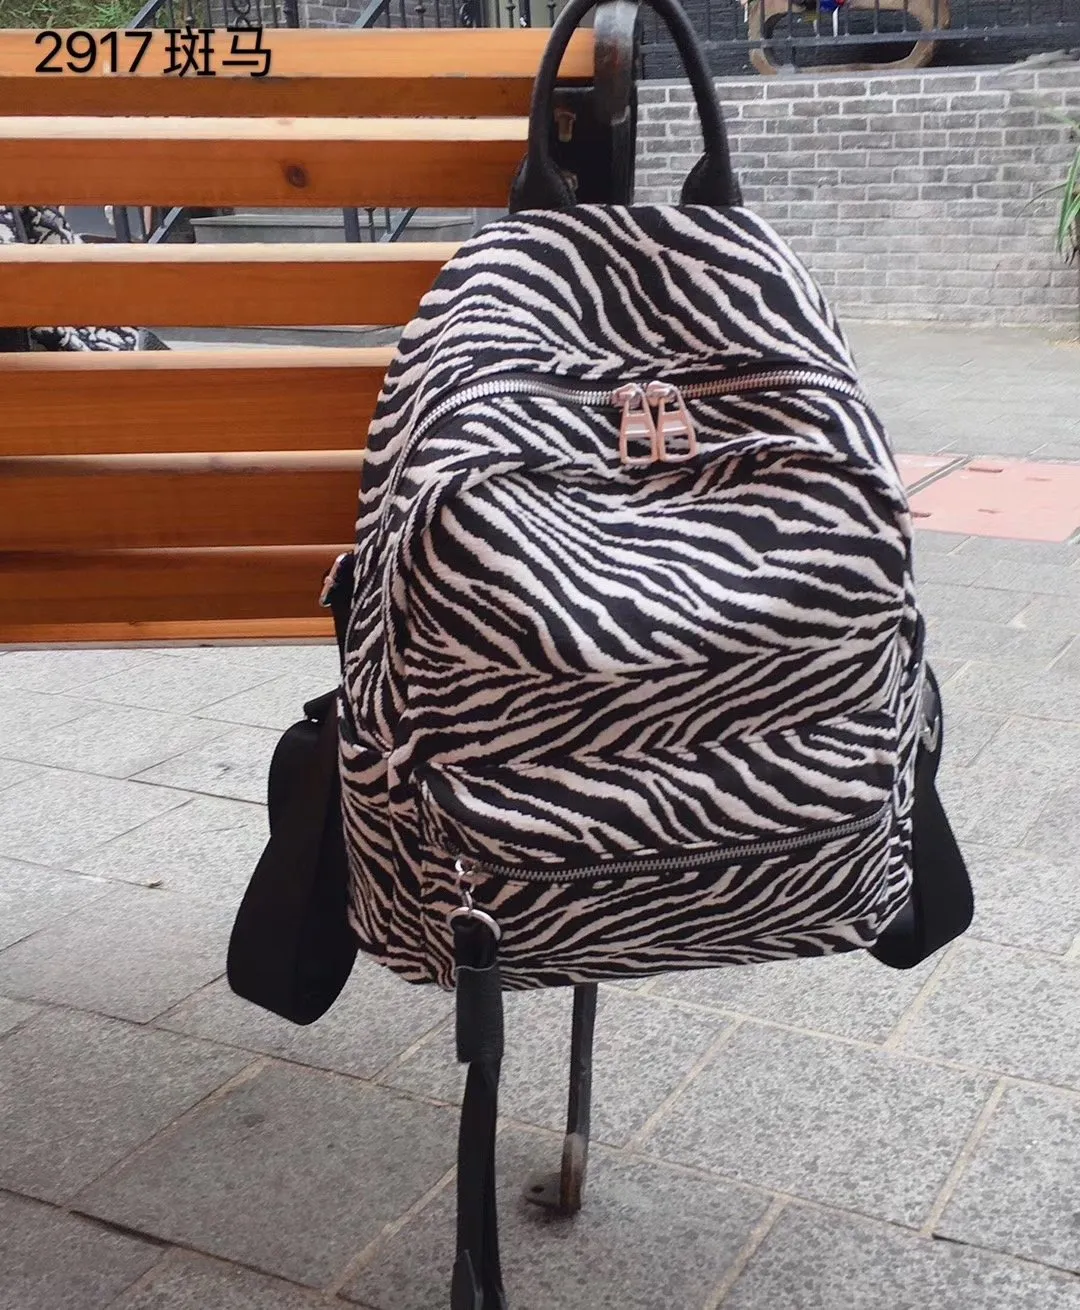 Ssw007 grossist backpack mode män kvinnor ryggsäck resväskor stilig bokbag axel bagsback pack 488 hb 40023